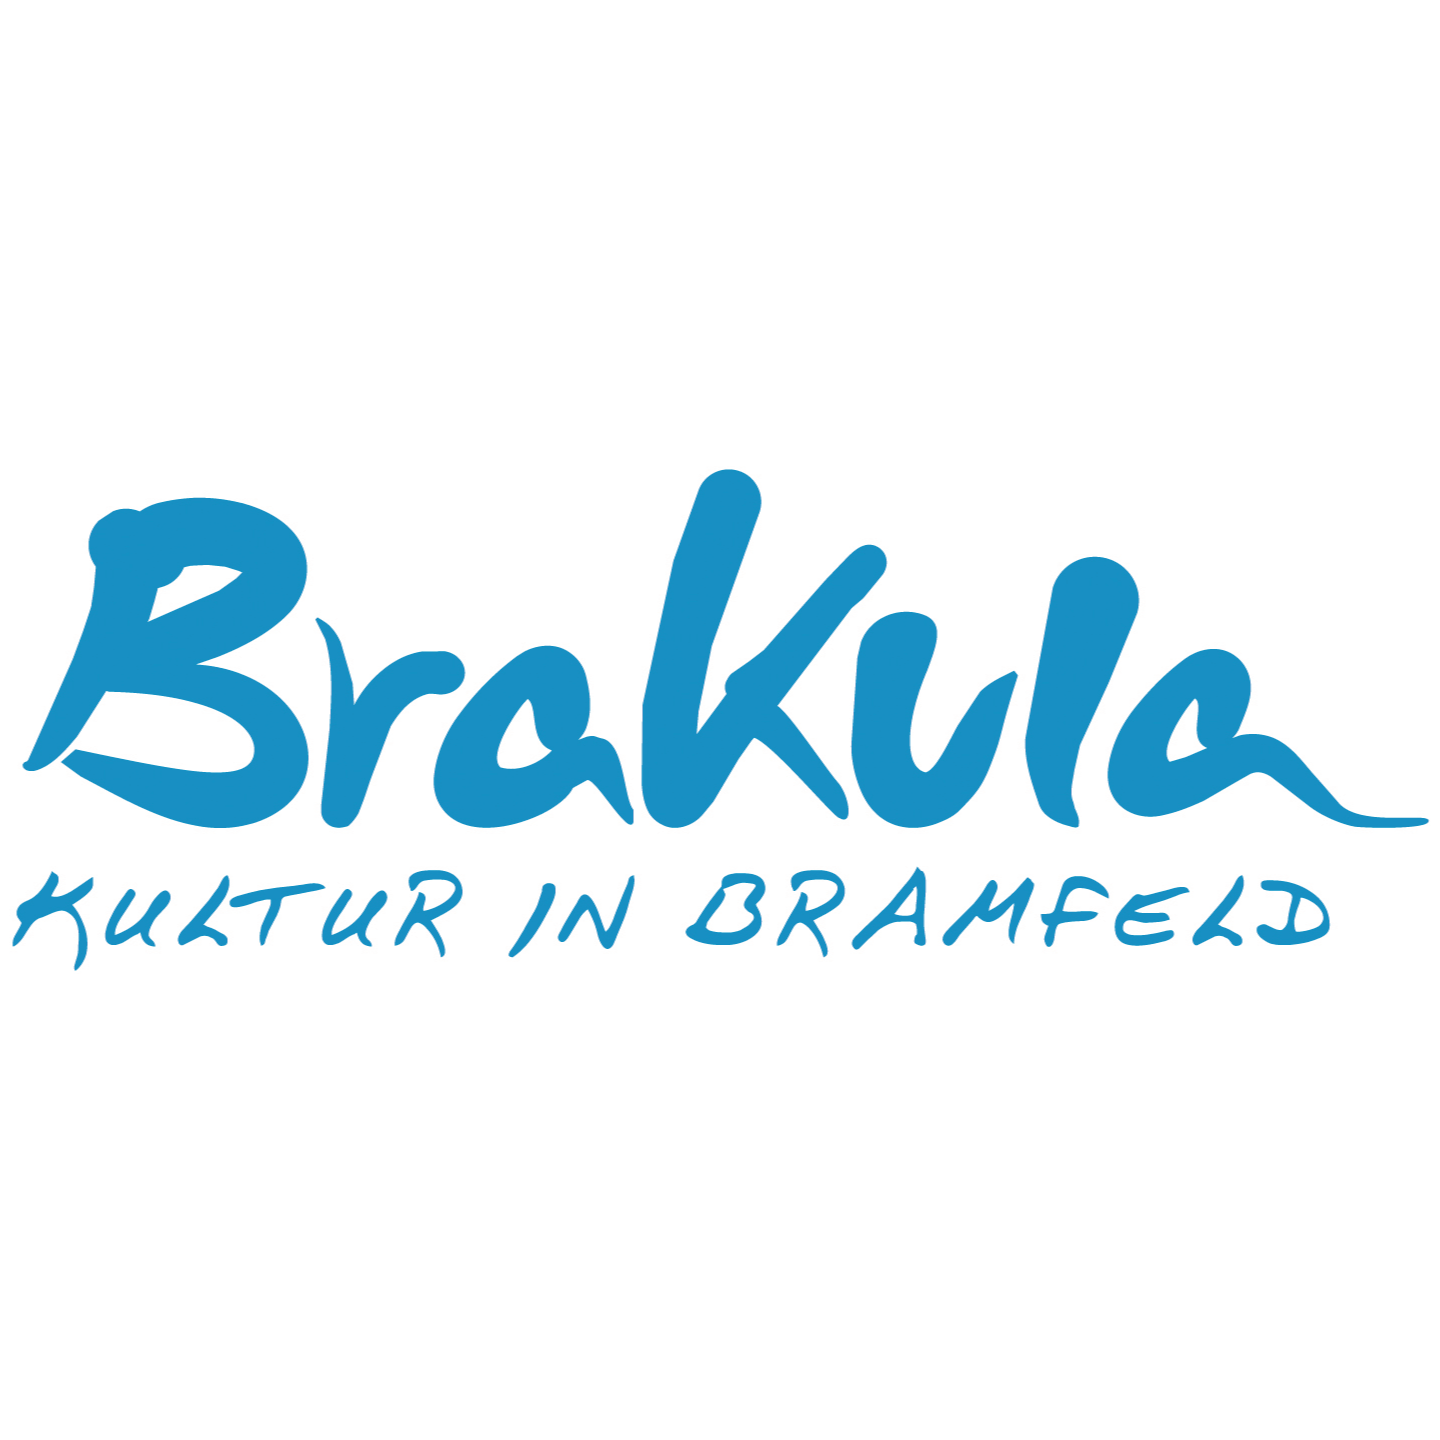 Brakula